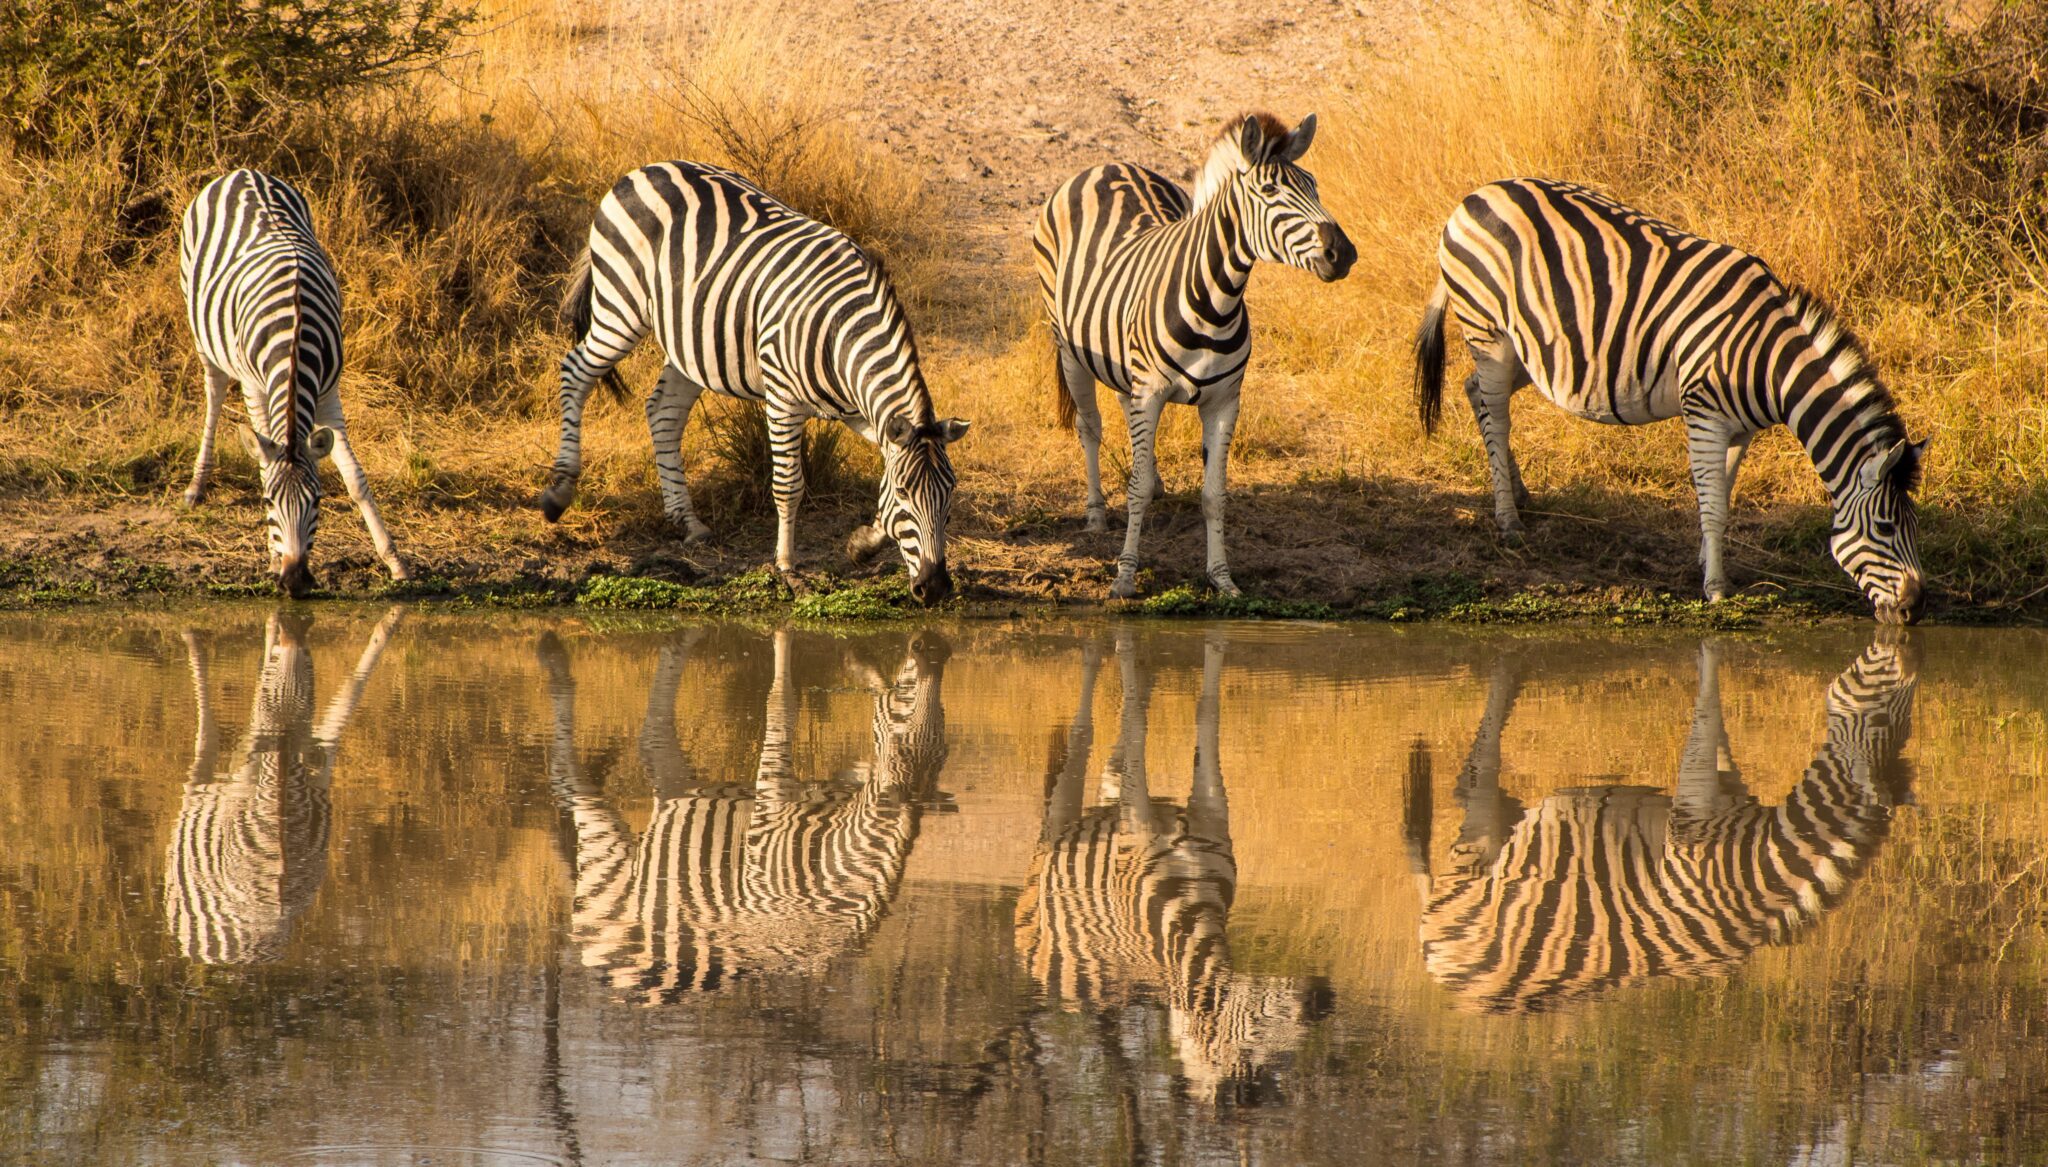 Kruger & Mapungubwe – An Iconic South African Safari